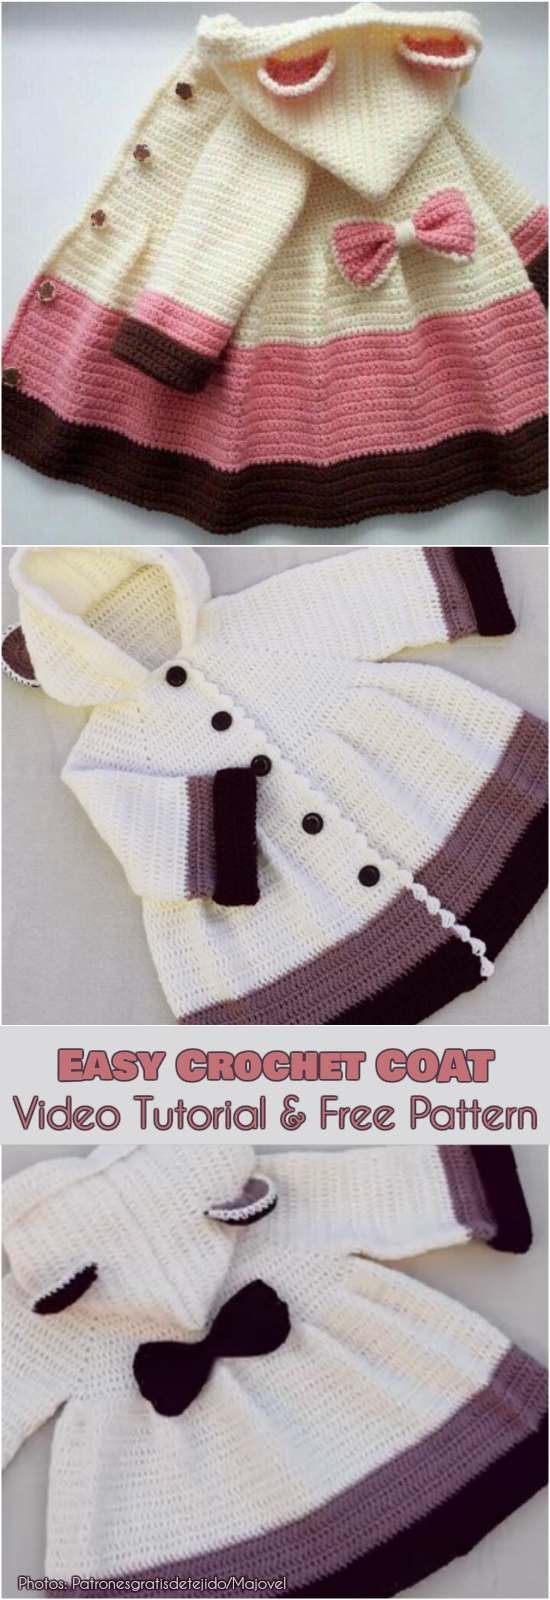 Easy-Crochet-Coat-Video-Tutorial-and-Free-Pattern.jpg